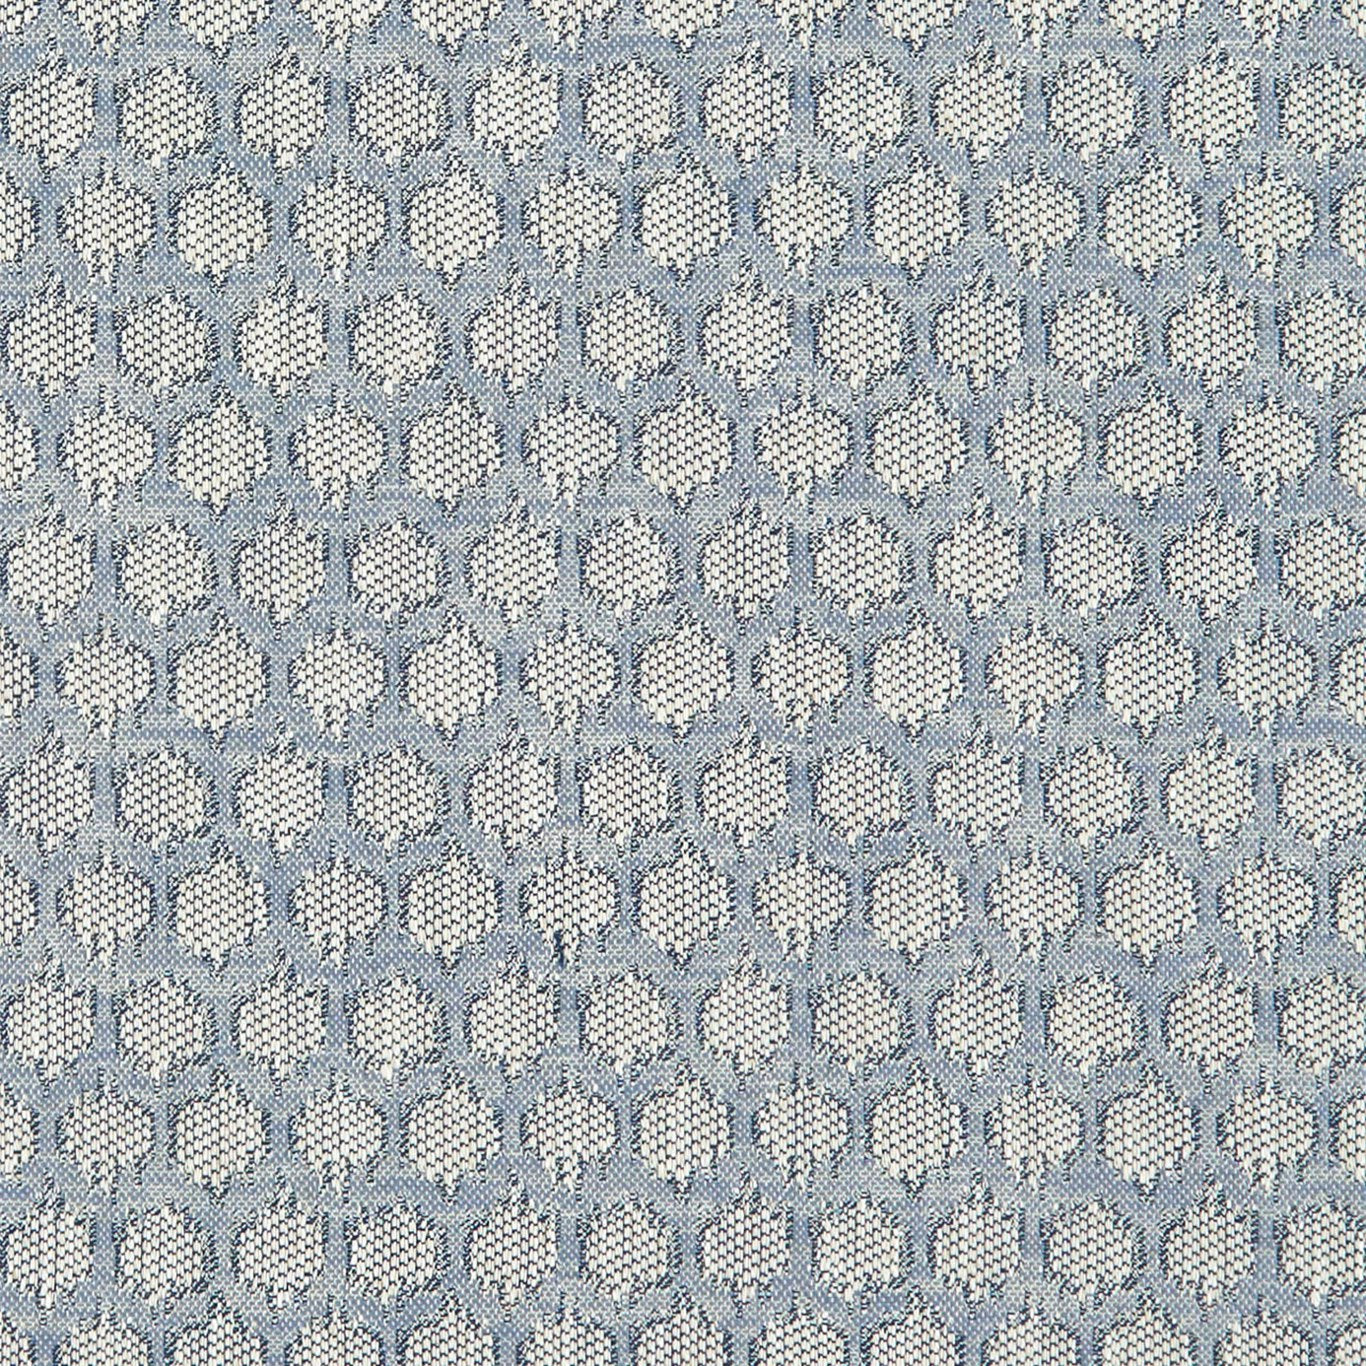 Dorset Fabric by Clarke & Clarke - F1178/04 - Denim